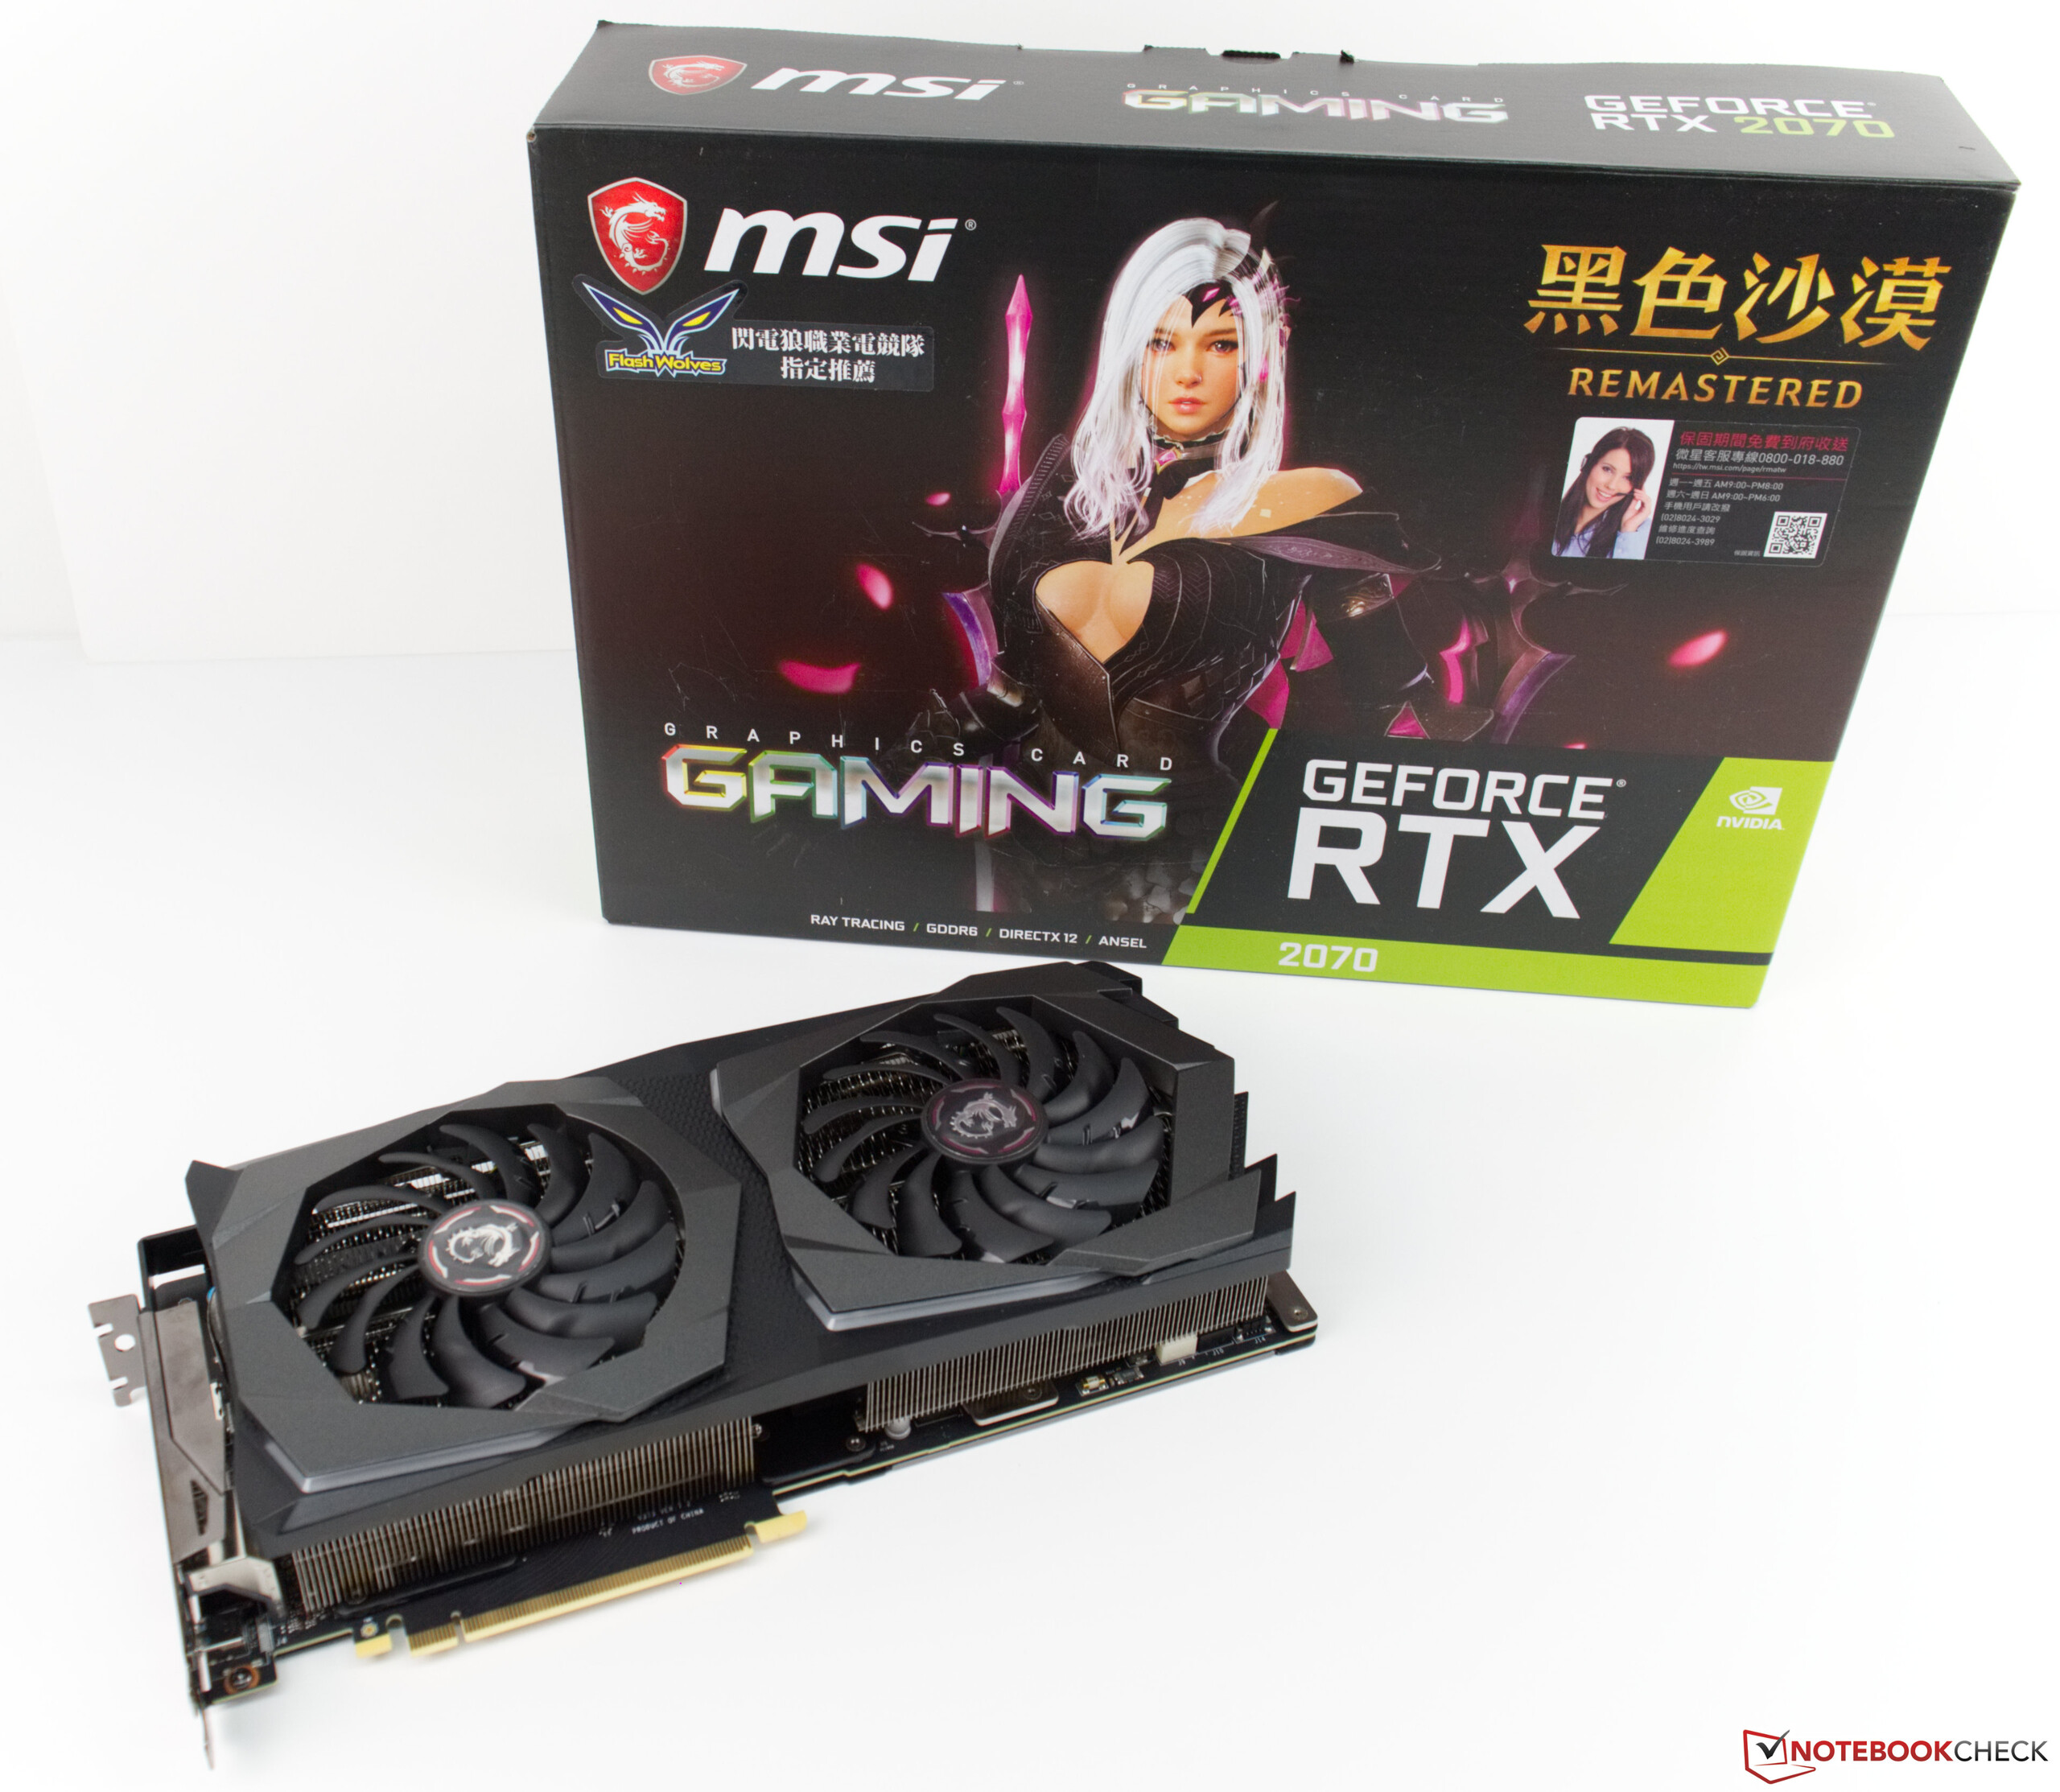 MSI RTX 2070 Gaming Z 8G Desktop GPU - NotebookCheck.net Reviews